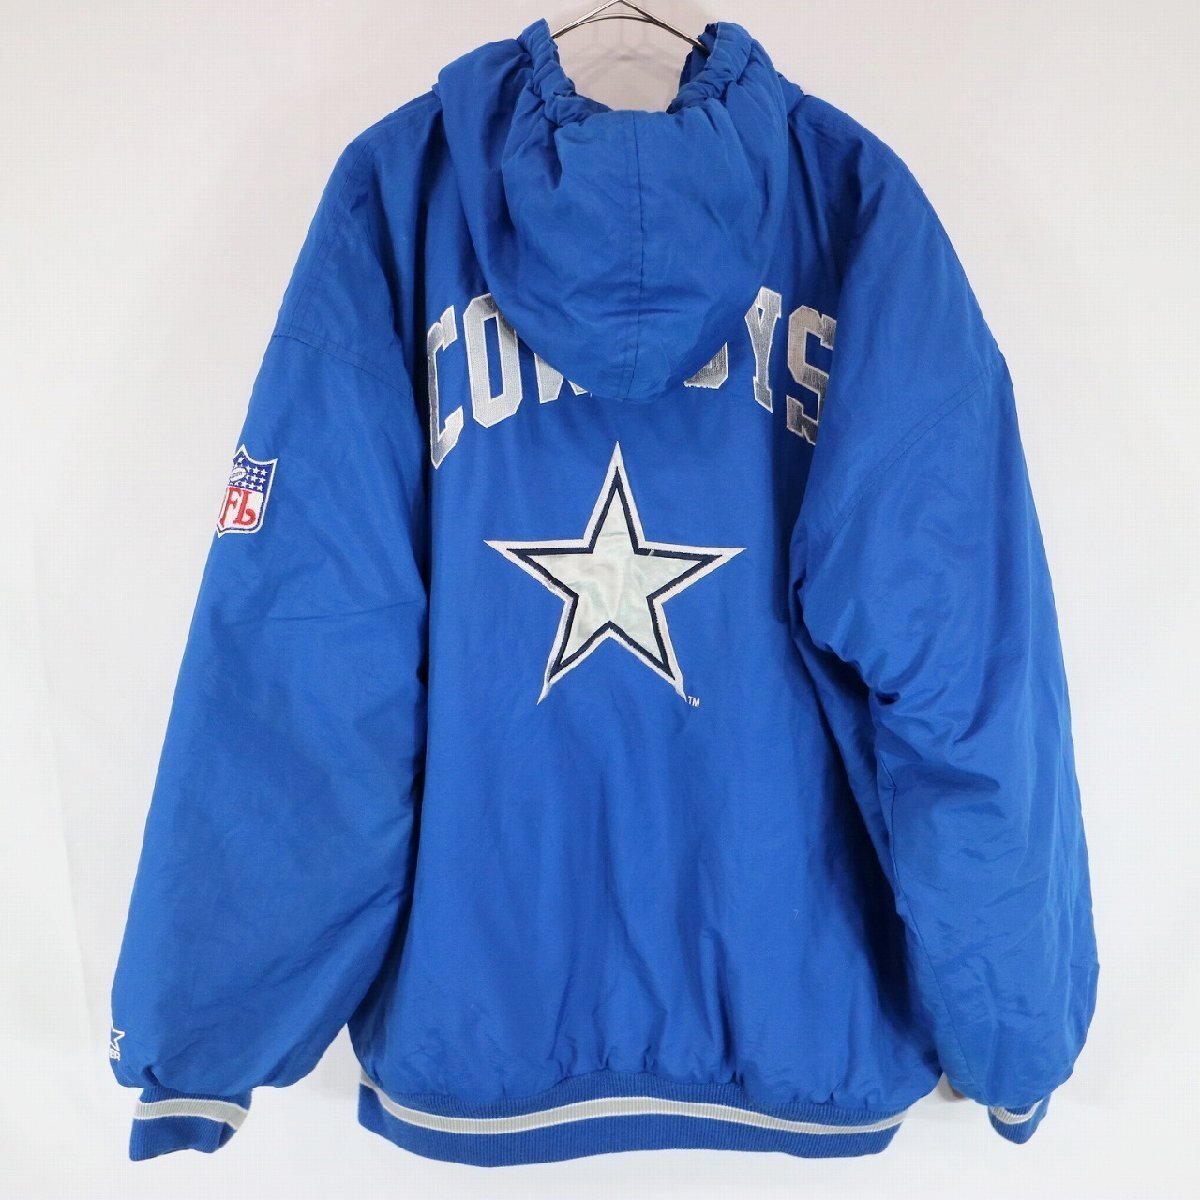 STARTER NFLdalas*kau boys cotton inside nylon jacket sport american football Pro team blue ( men's XL ) N3169 1 jpy start 